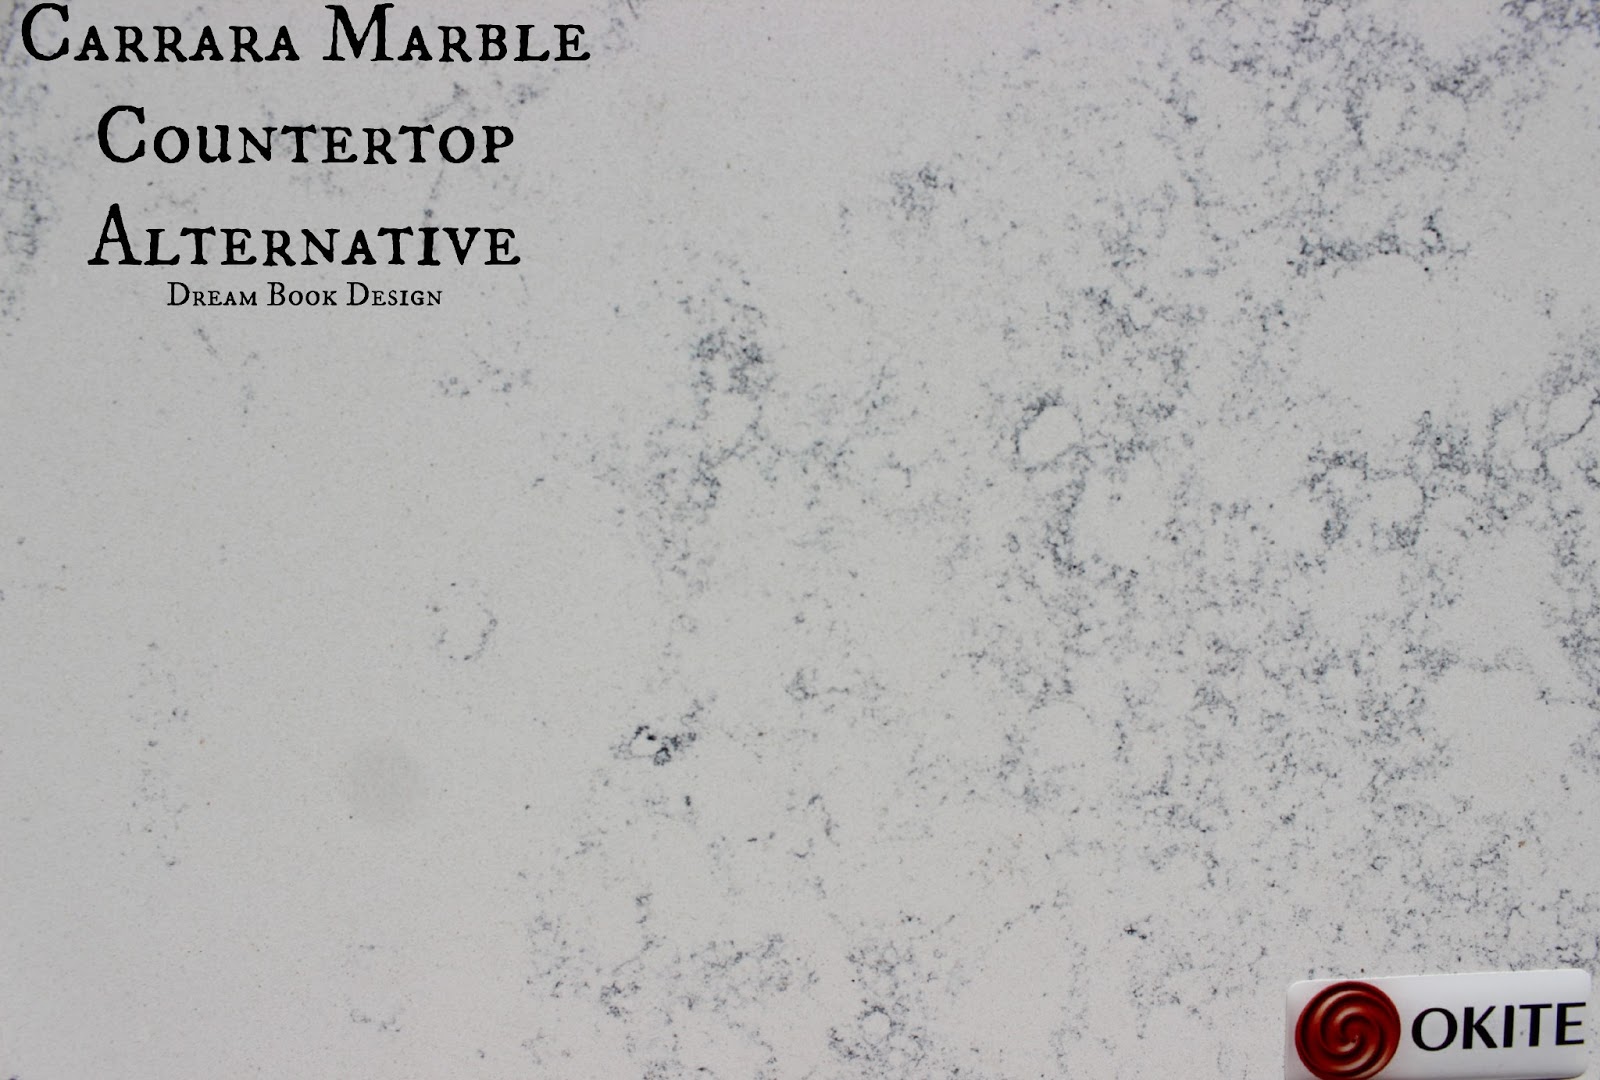 Okite Countertops An Alternative To Carrara Marble Dream Book